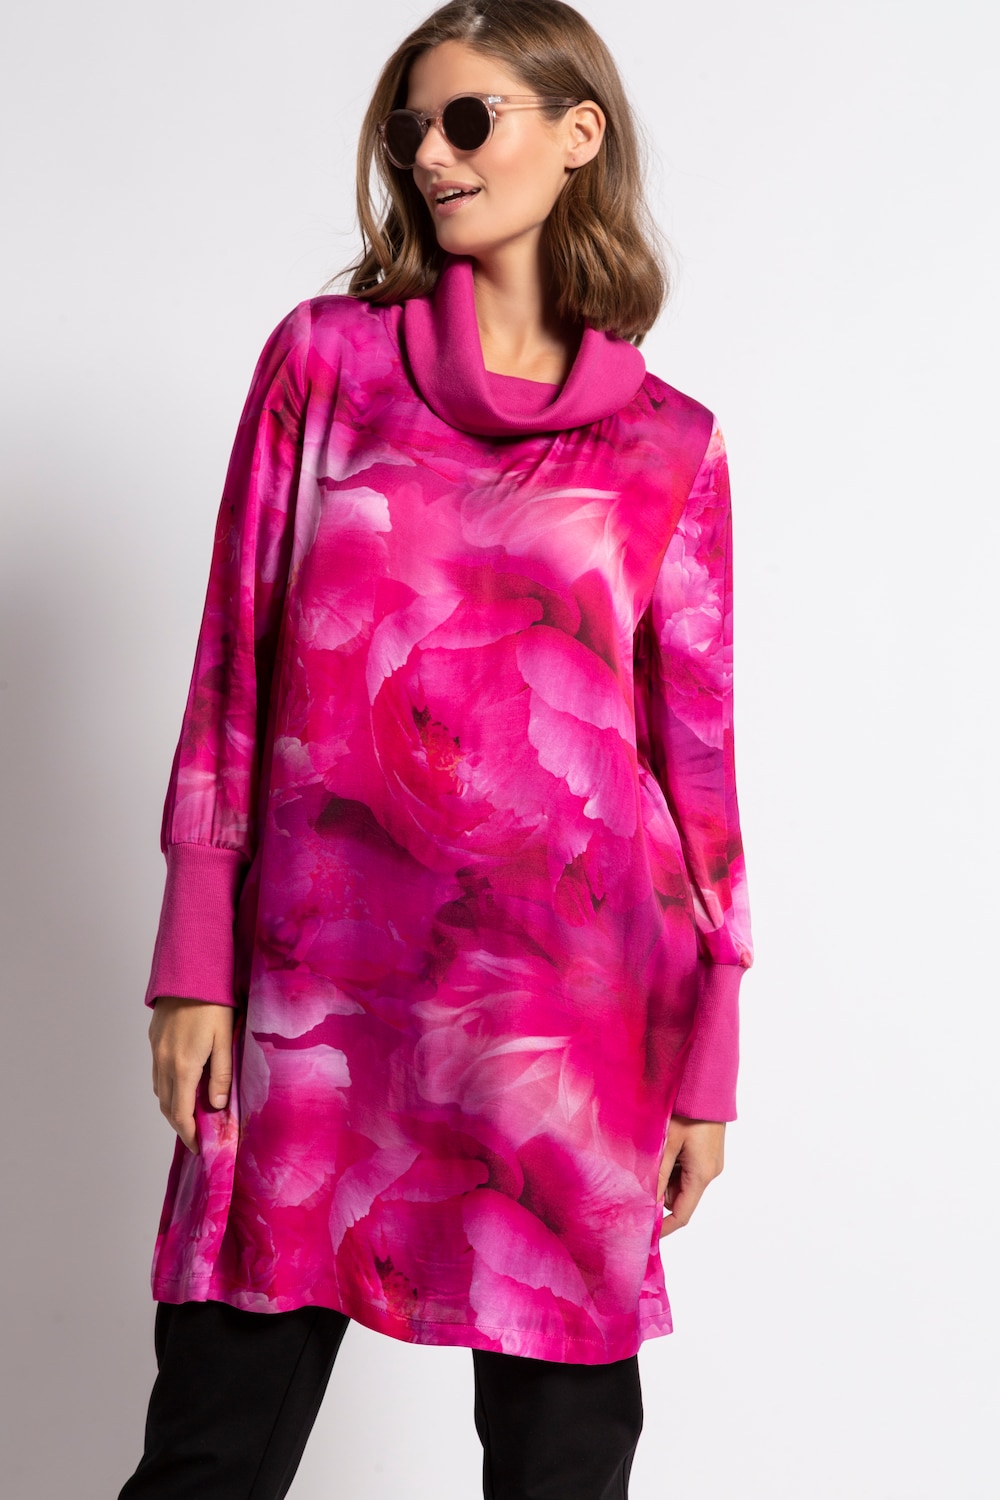 Plus Size Mixed Fabric Floral Turtleneck Tunic Blouse, Woman, pink, size: 16/18, viscose, Ulla Popken